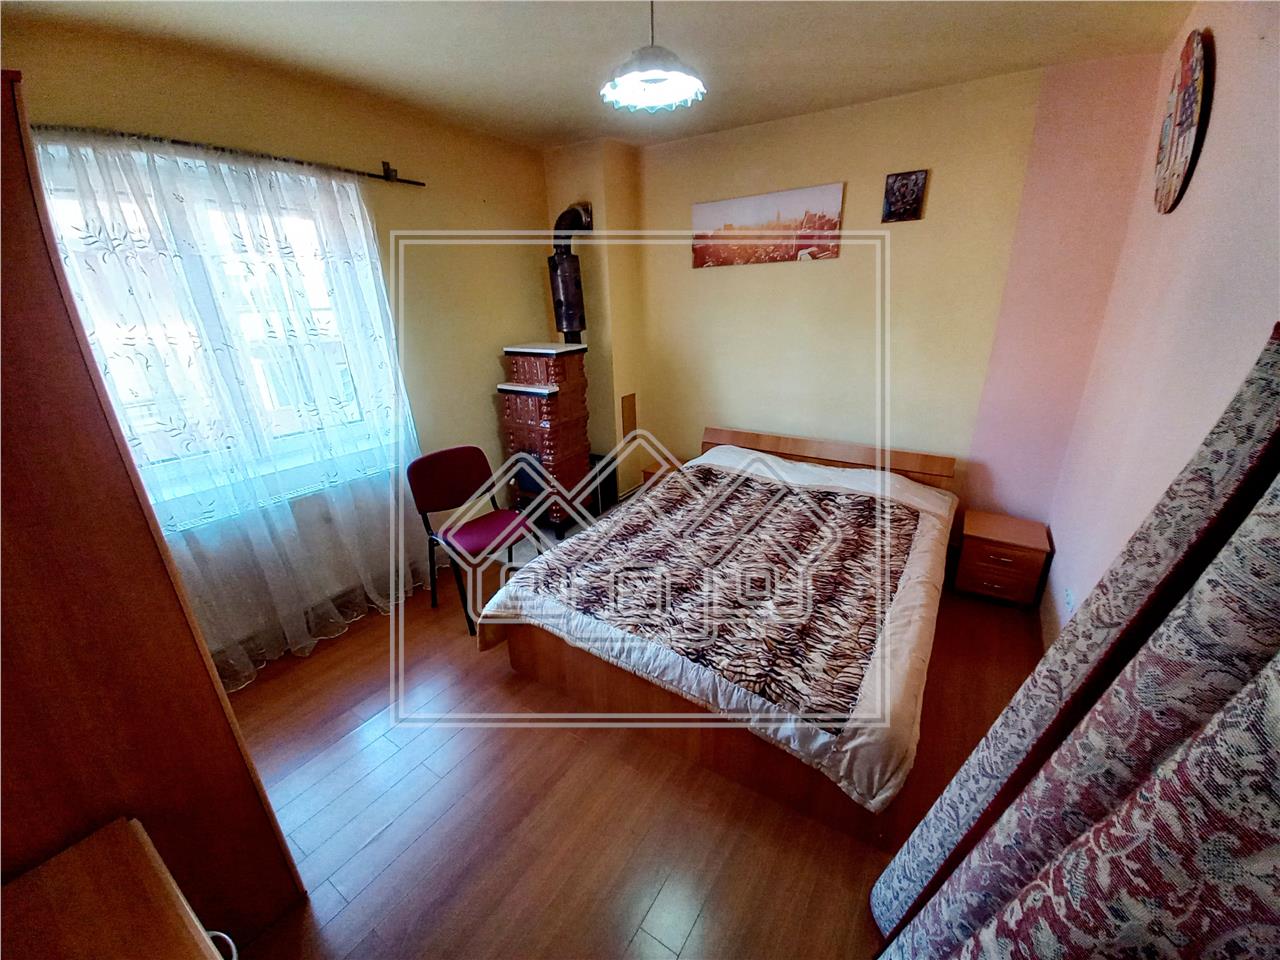 House for sale in Alba Iulia - 9 rooms - 4 bathrooms - 2 balconies - C